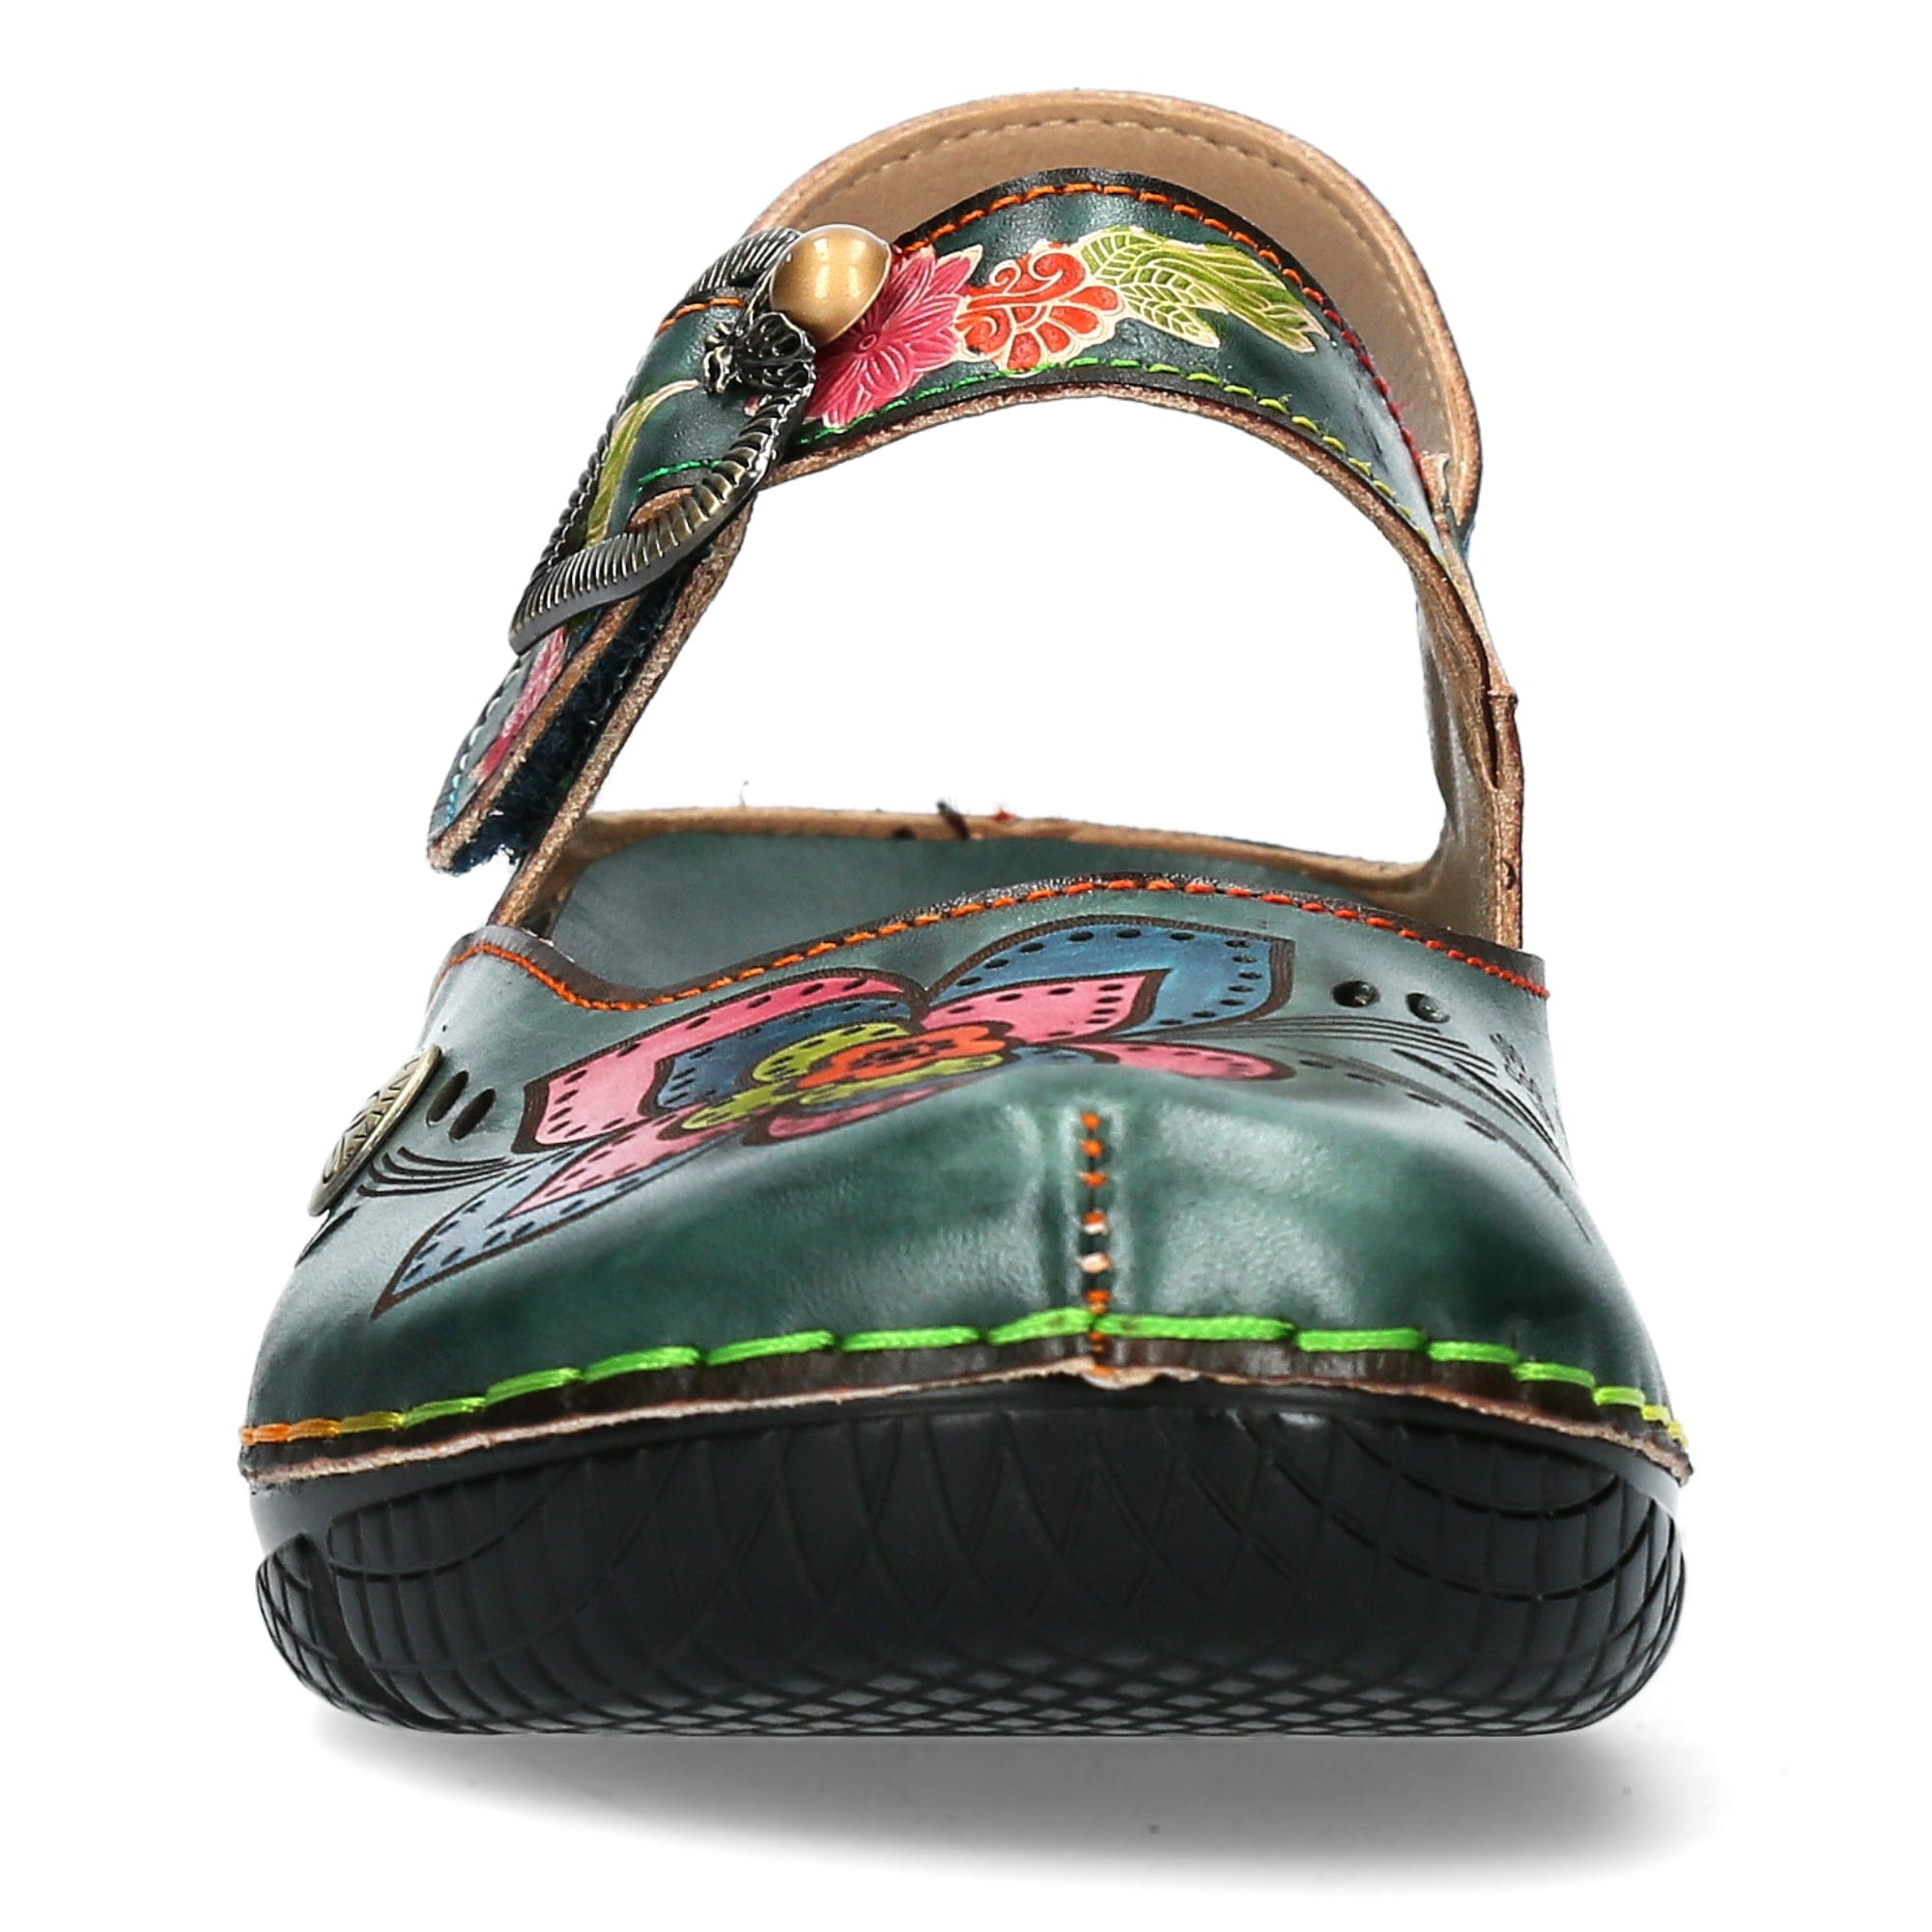 Chaussure IDCELETTEO 524 - Sandale